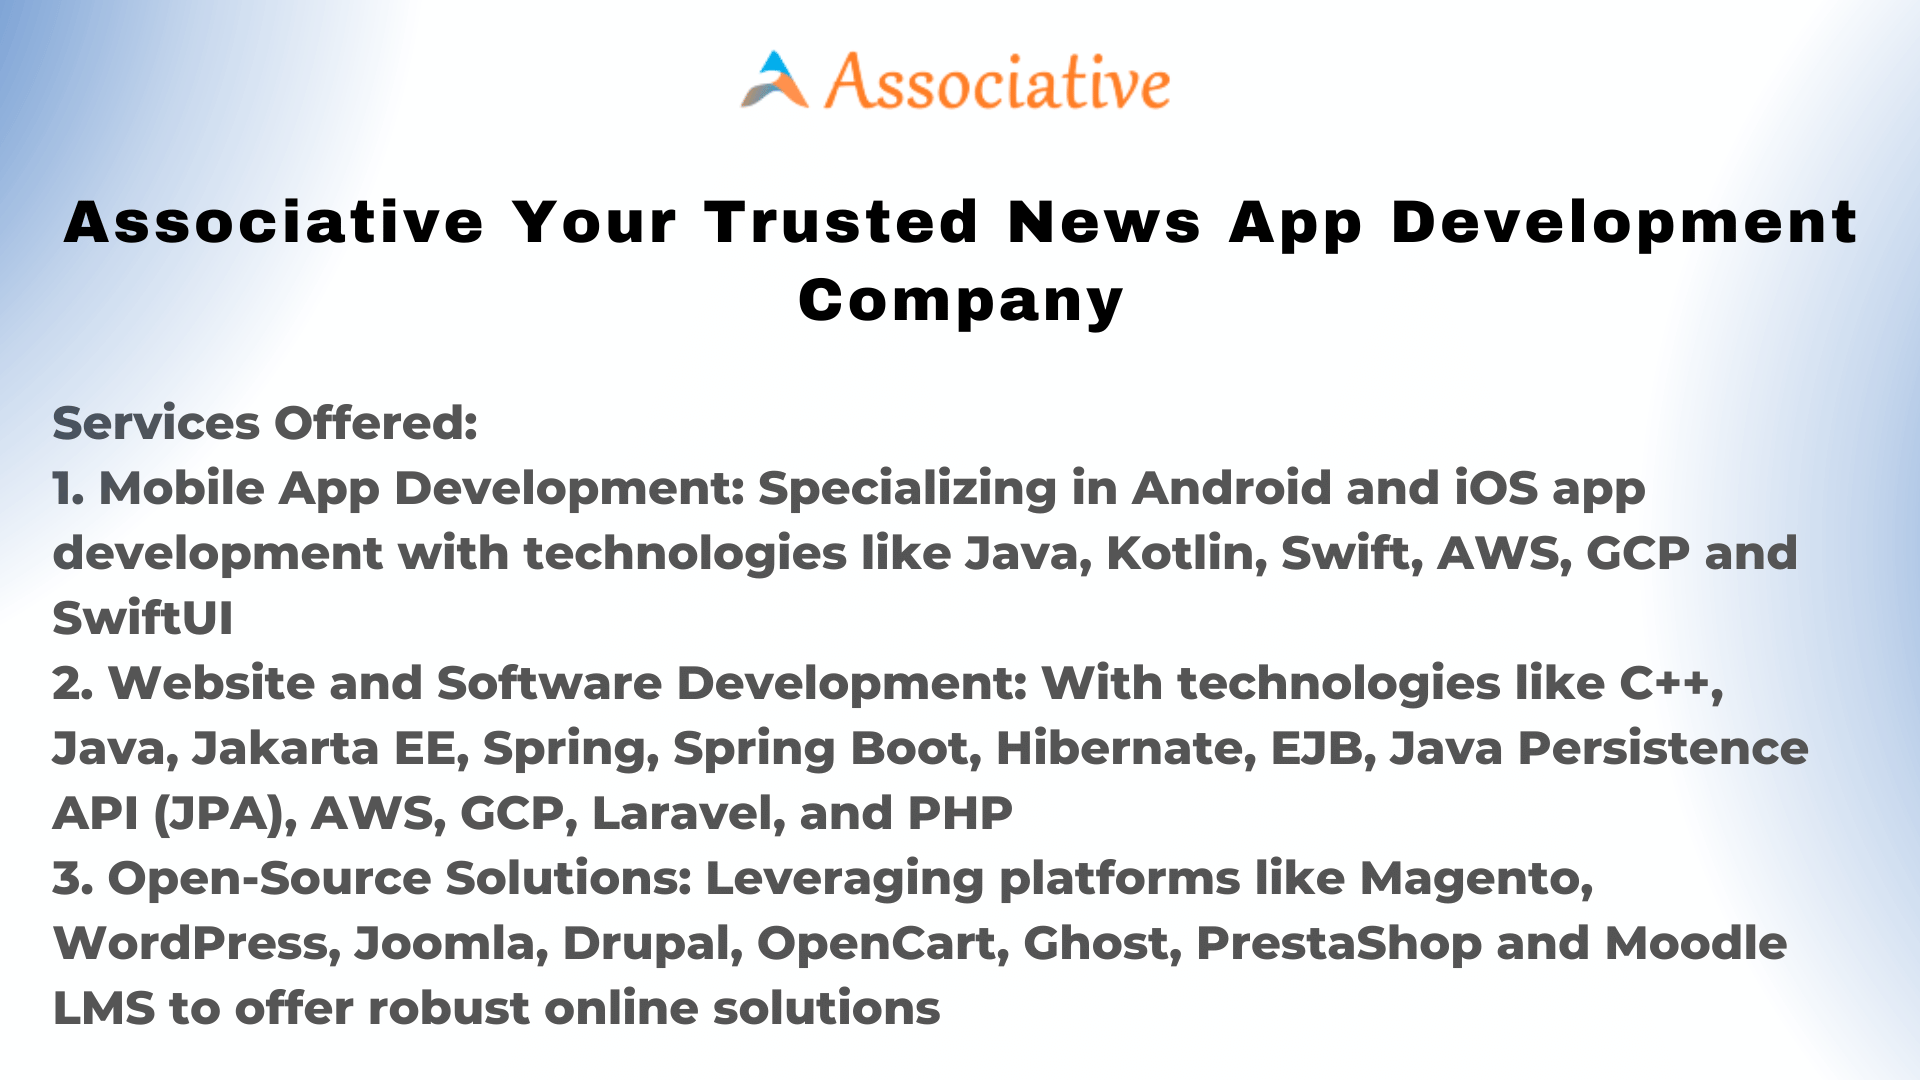 Associative Your Trusted News App Development Company